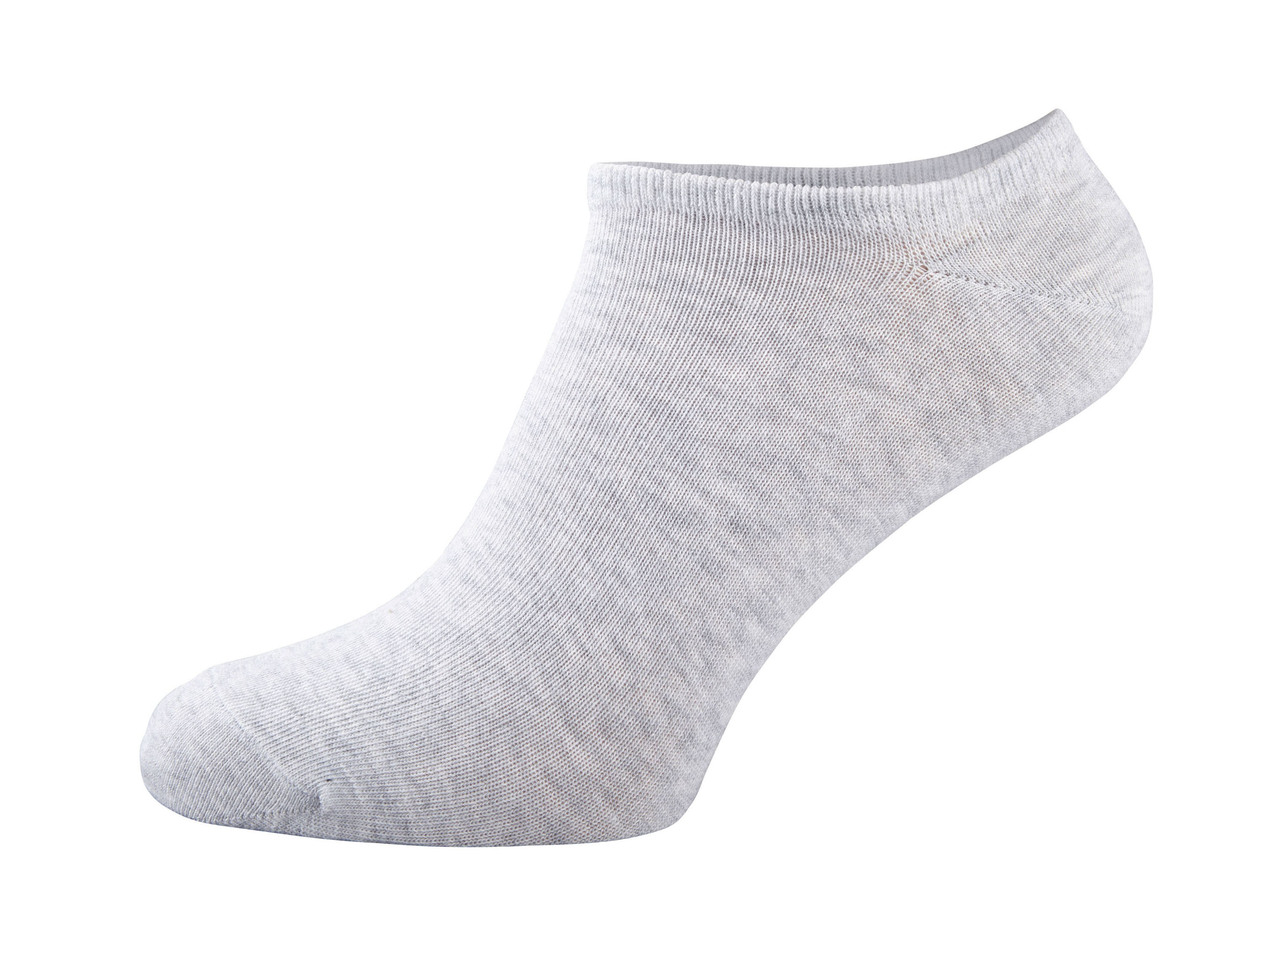 Men's Trainer Socks, 5 pairs